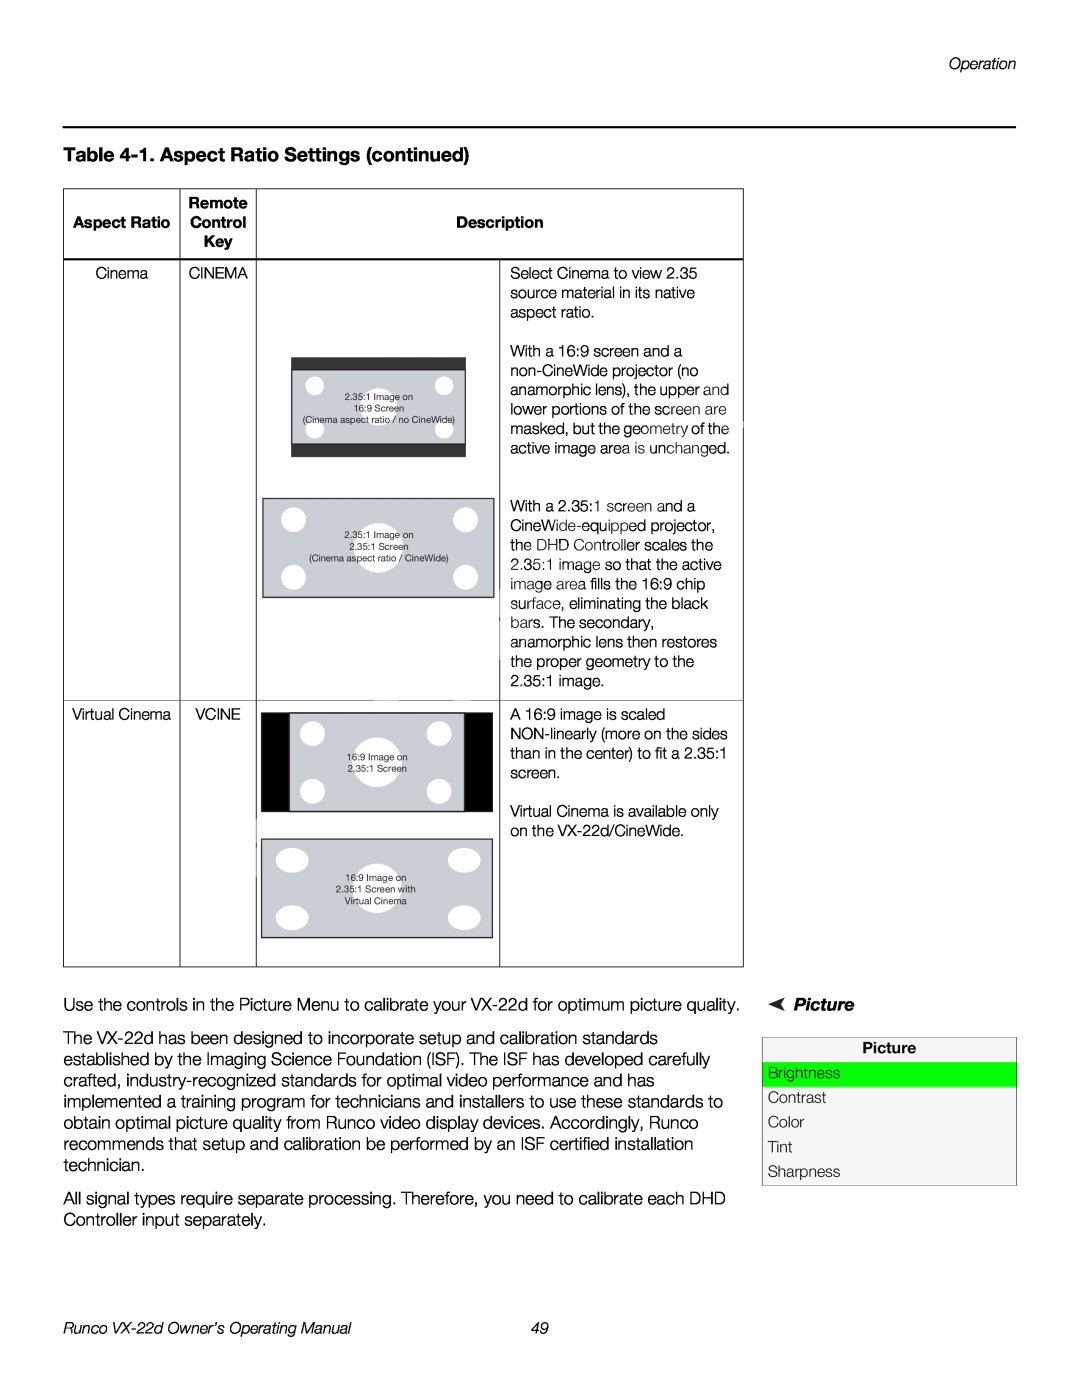 Runco VX-22D manual 1. Aspect Ratio Settings continued, Picture 